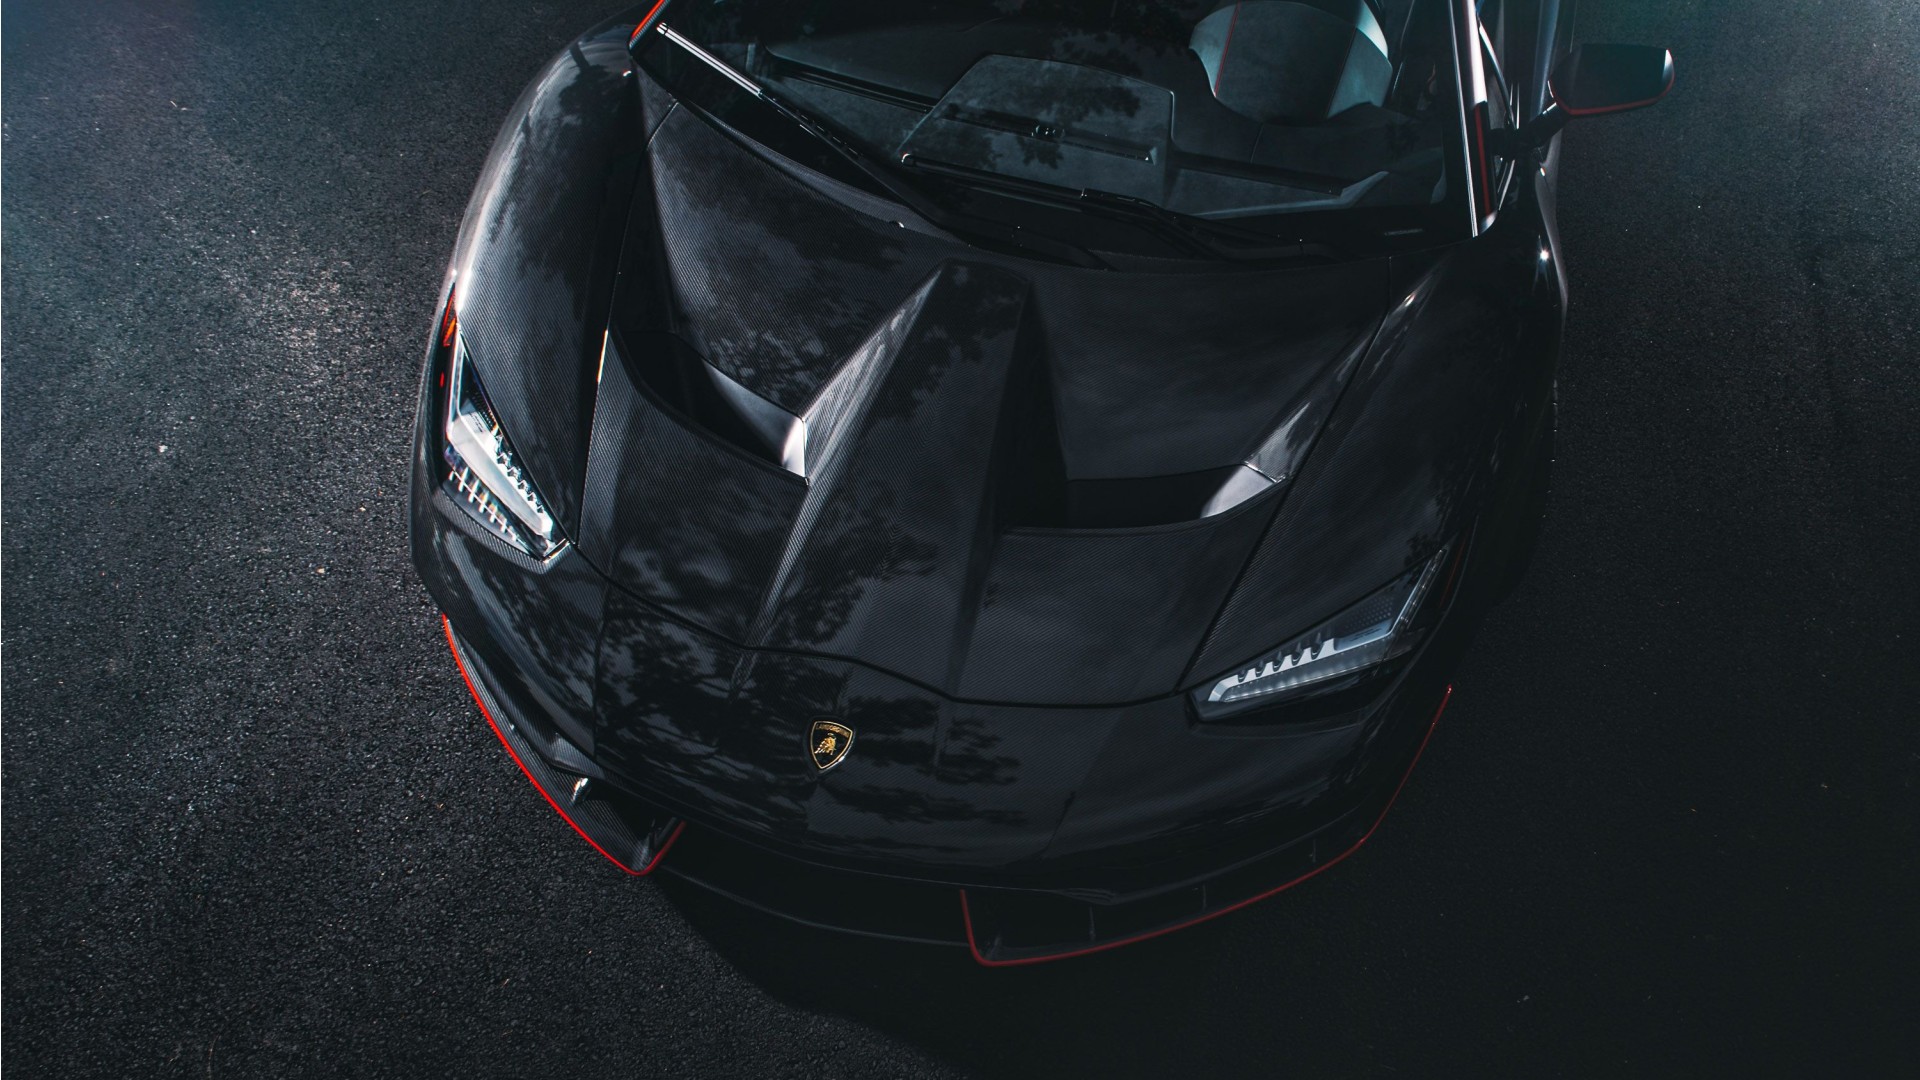 Lamborghini Centenario Coupe Wallpaper | HD Car Wallpapers ...